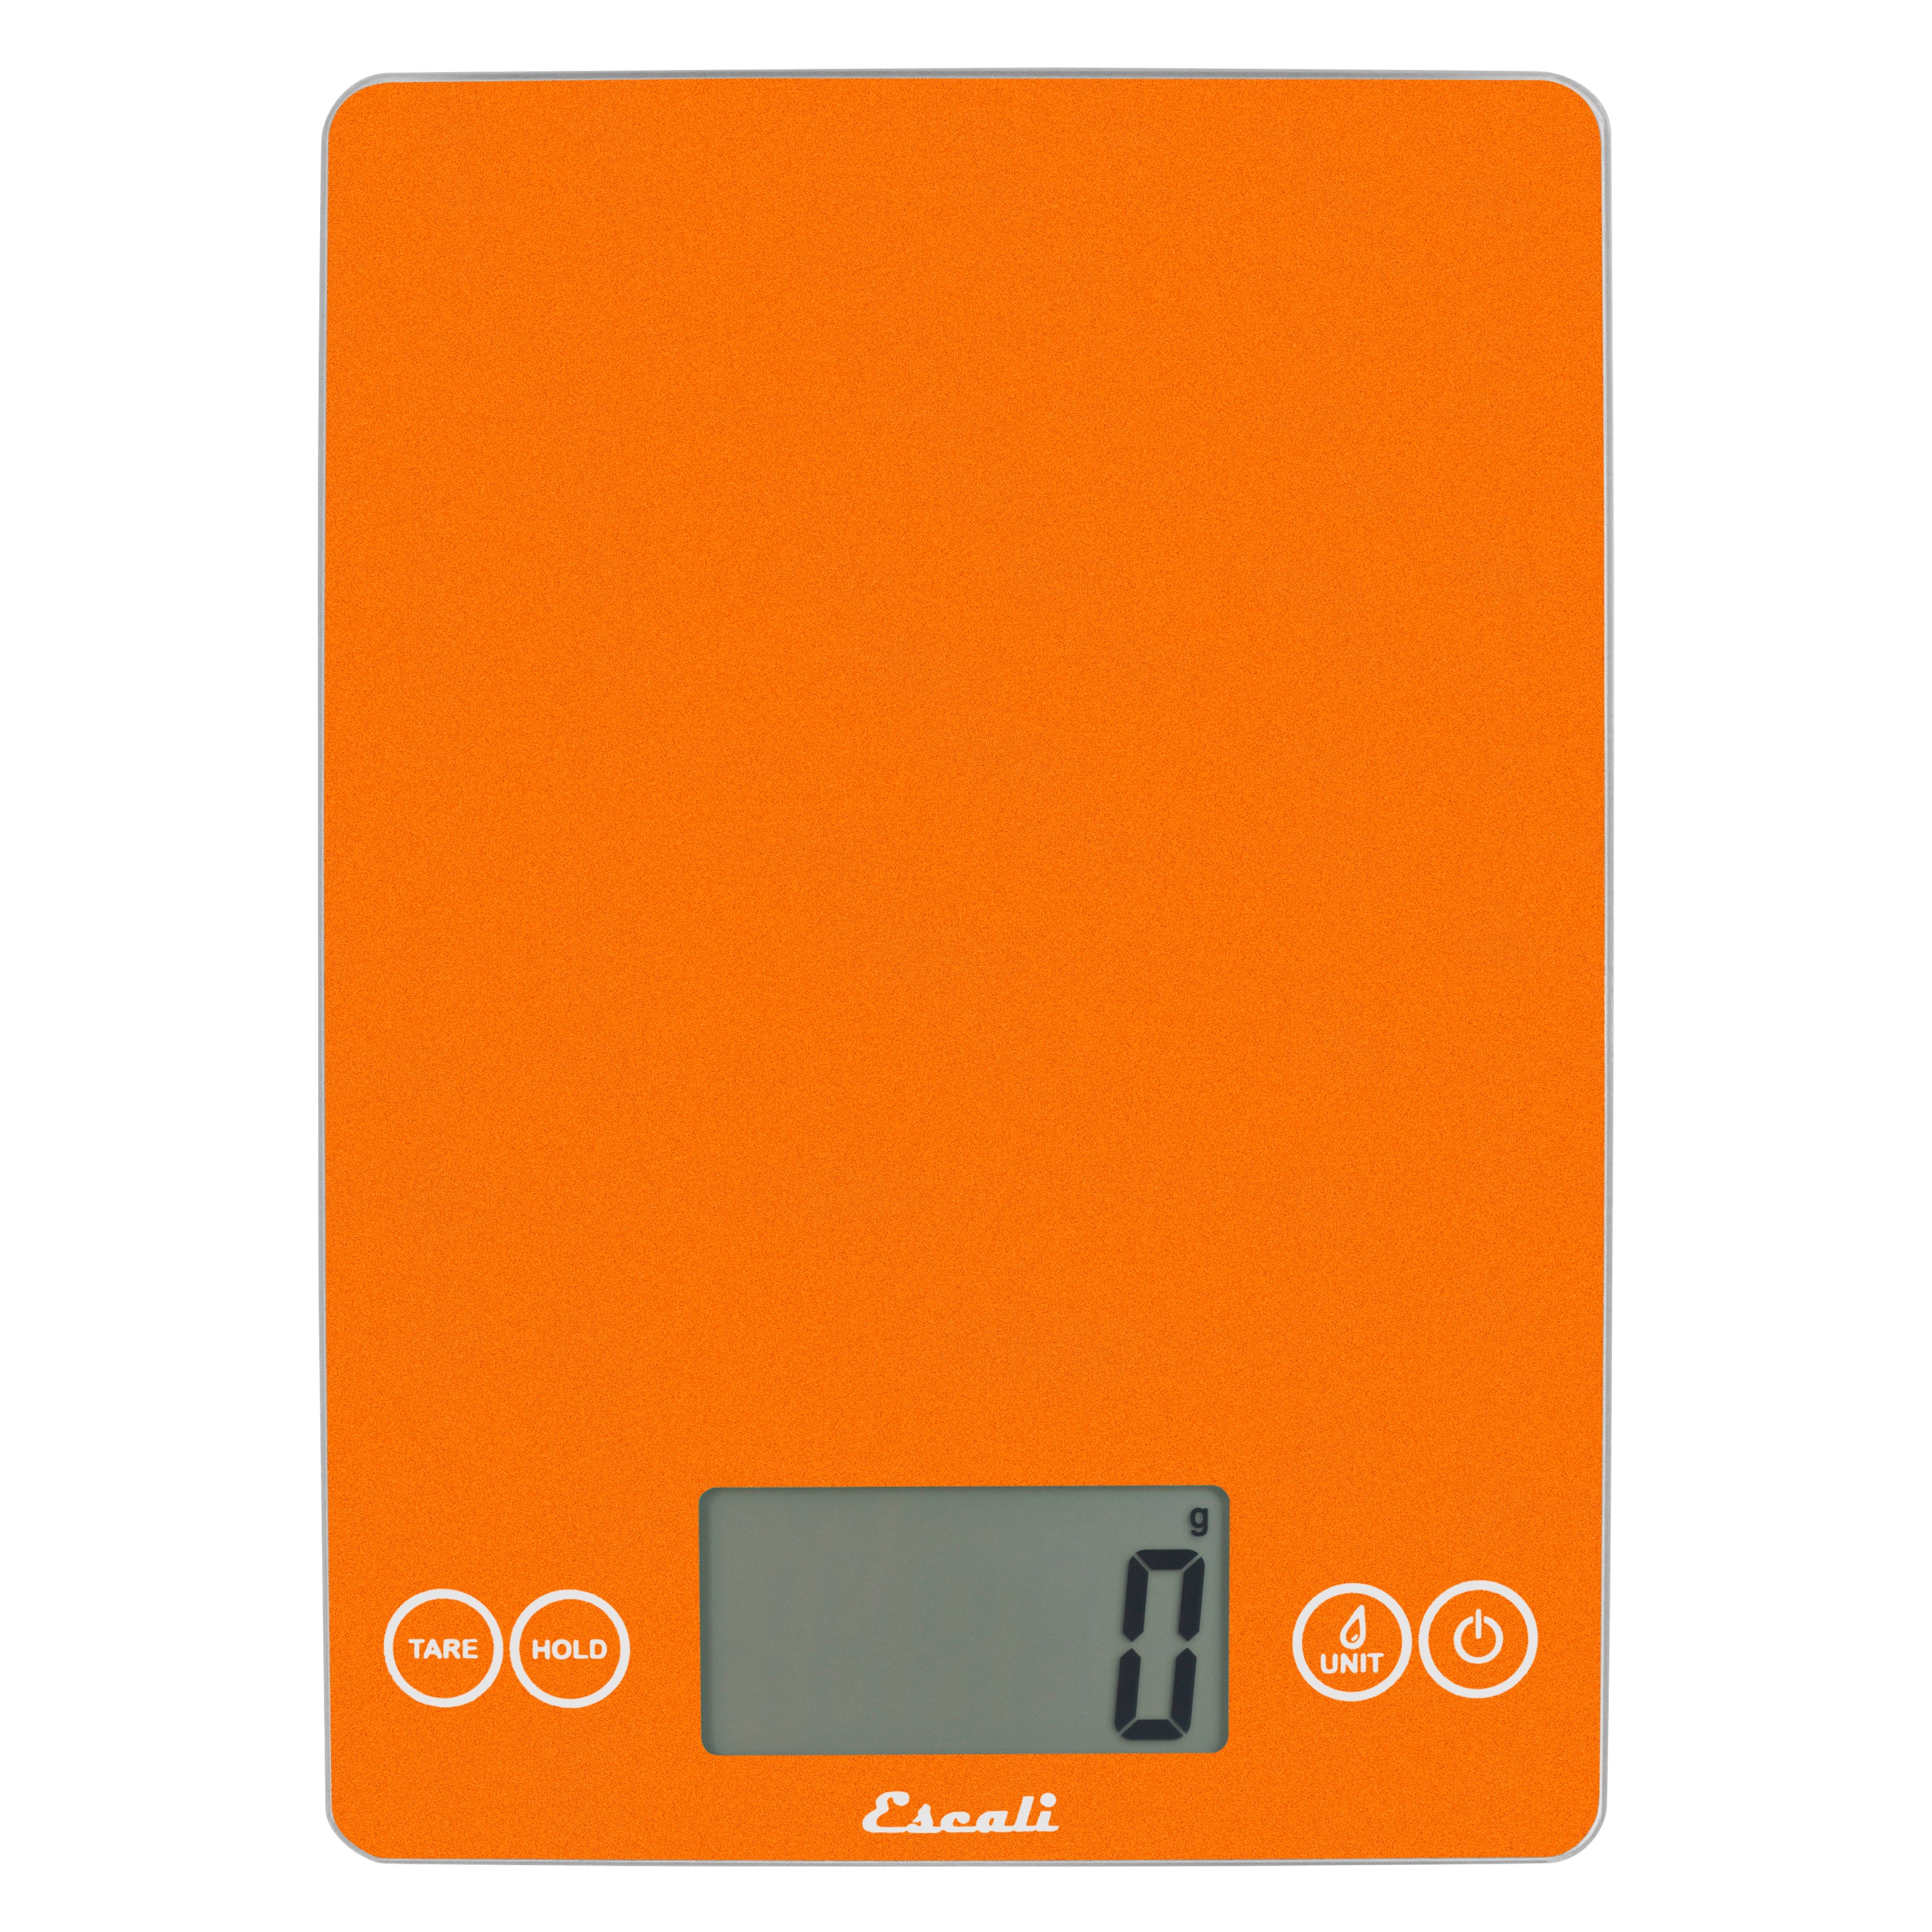 A photo of a orange sol color ARTI Digital Kitchen Scale on a white background.